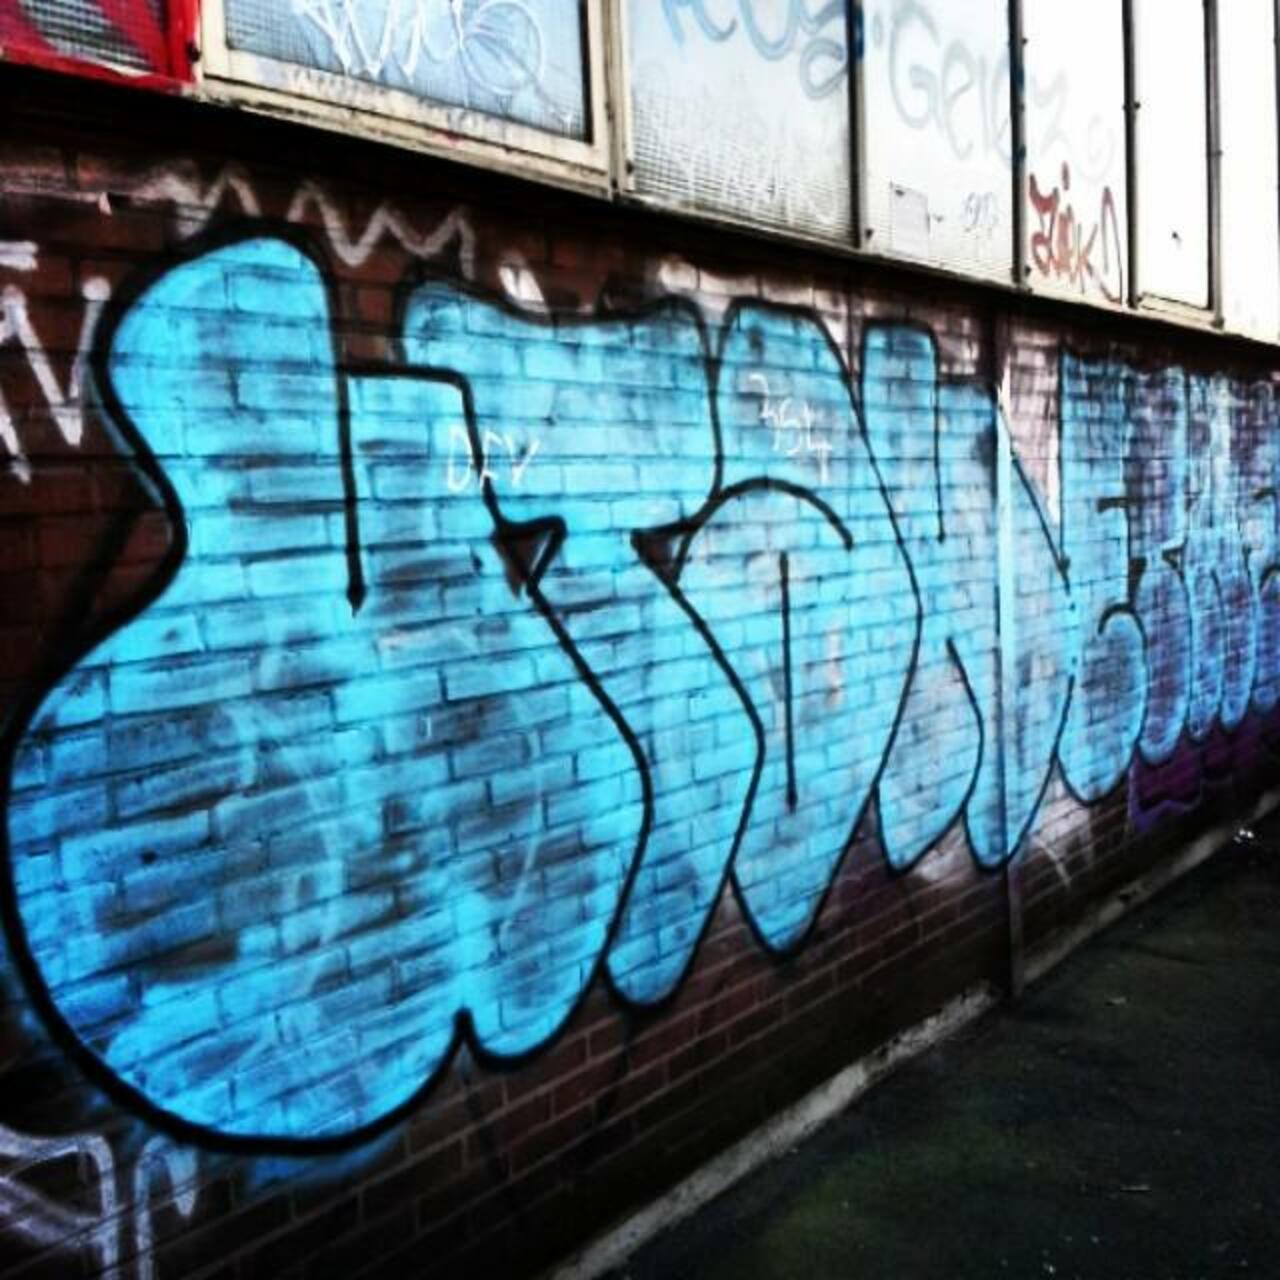 RT @artpushr: via #schmierlio_kater "http://bit.ly/1JSwnE1" #graffiti #streetart http://t.co/rNLG0ziVru